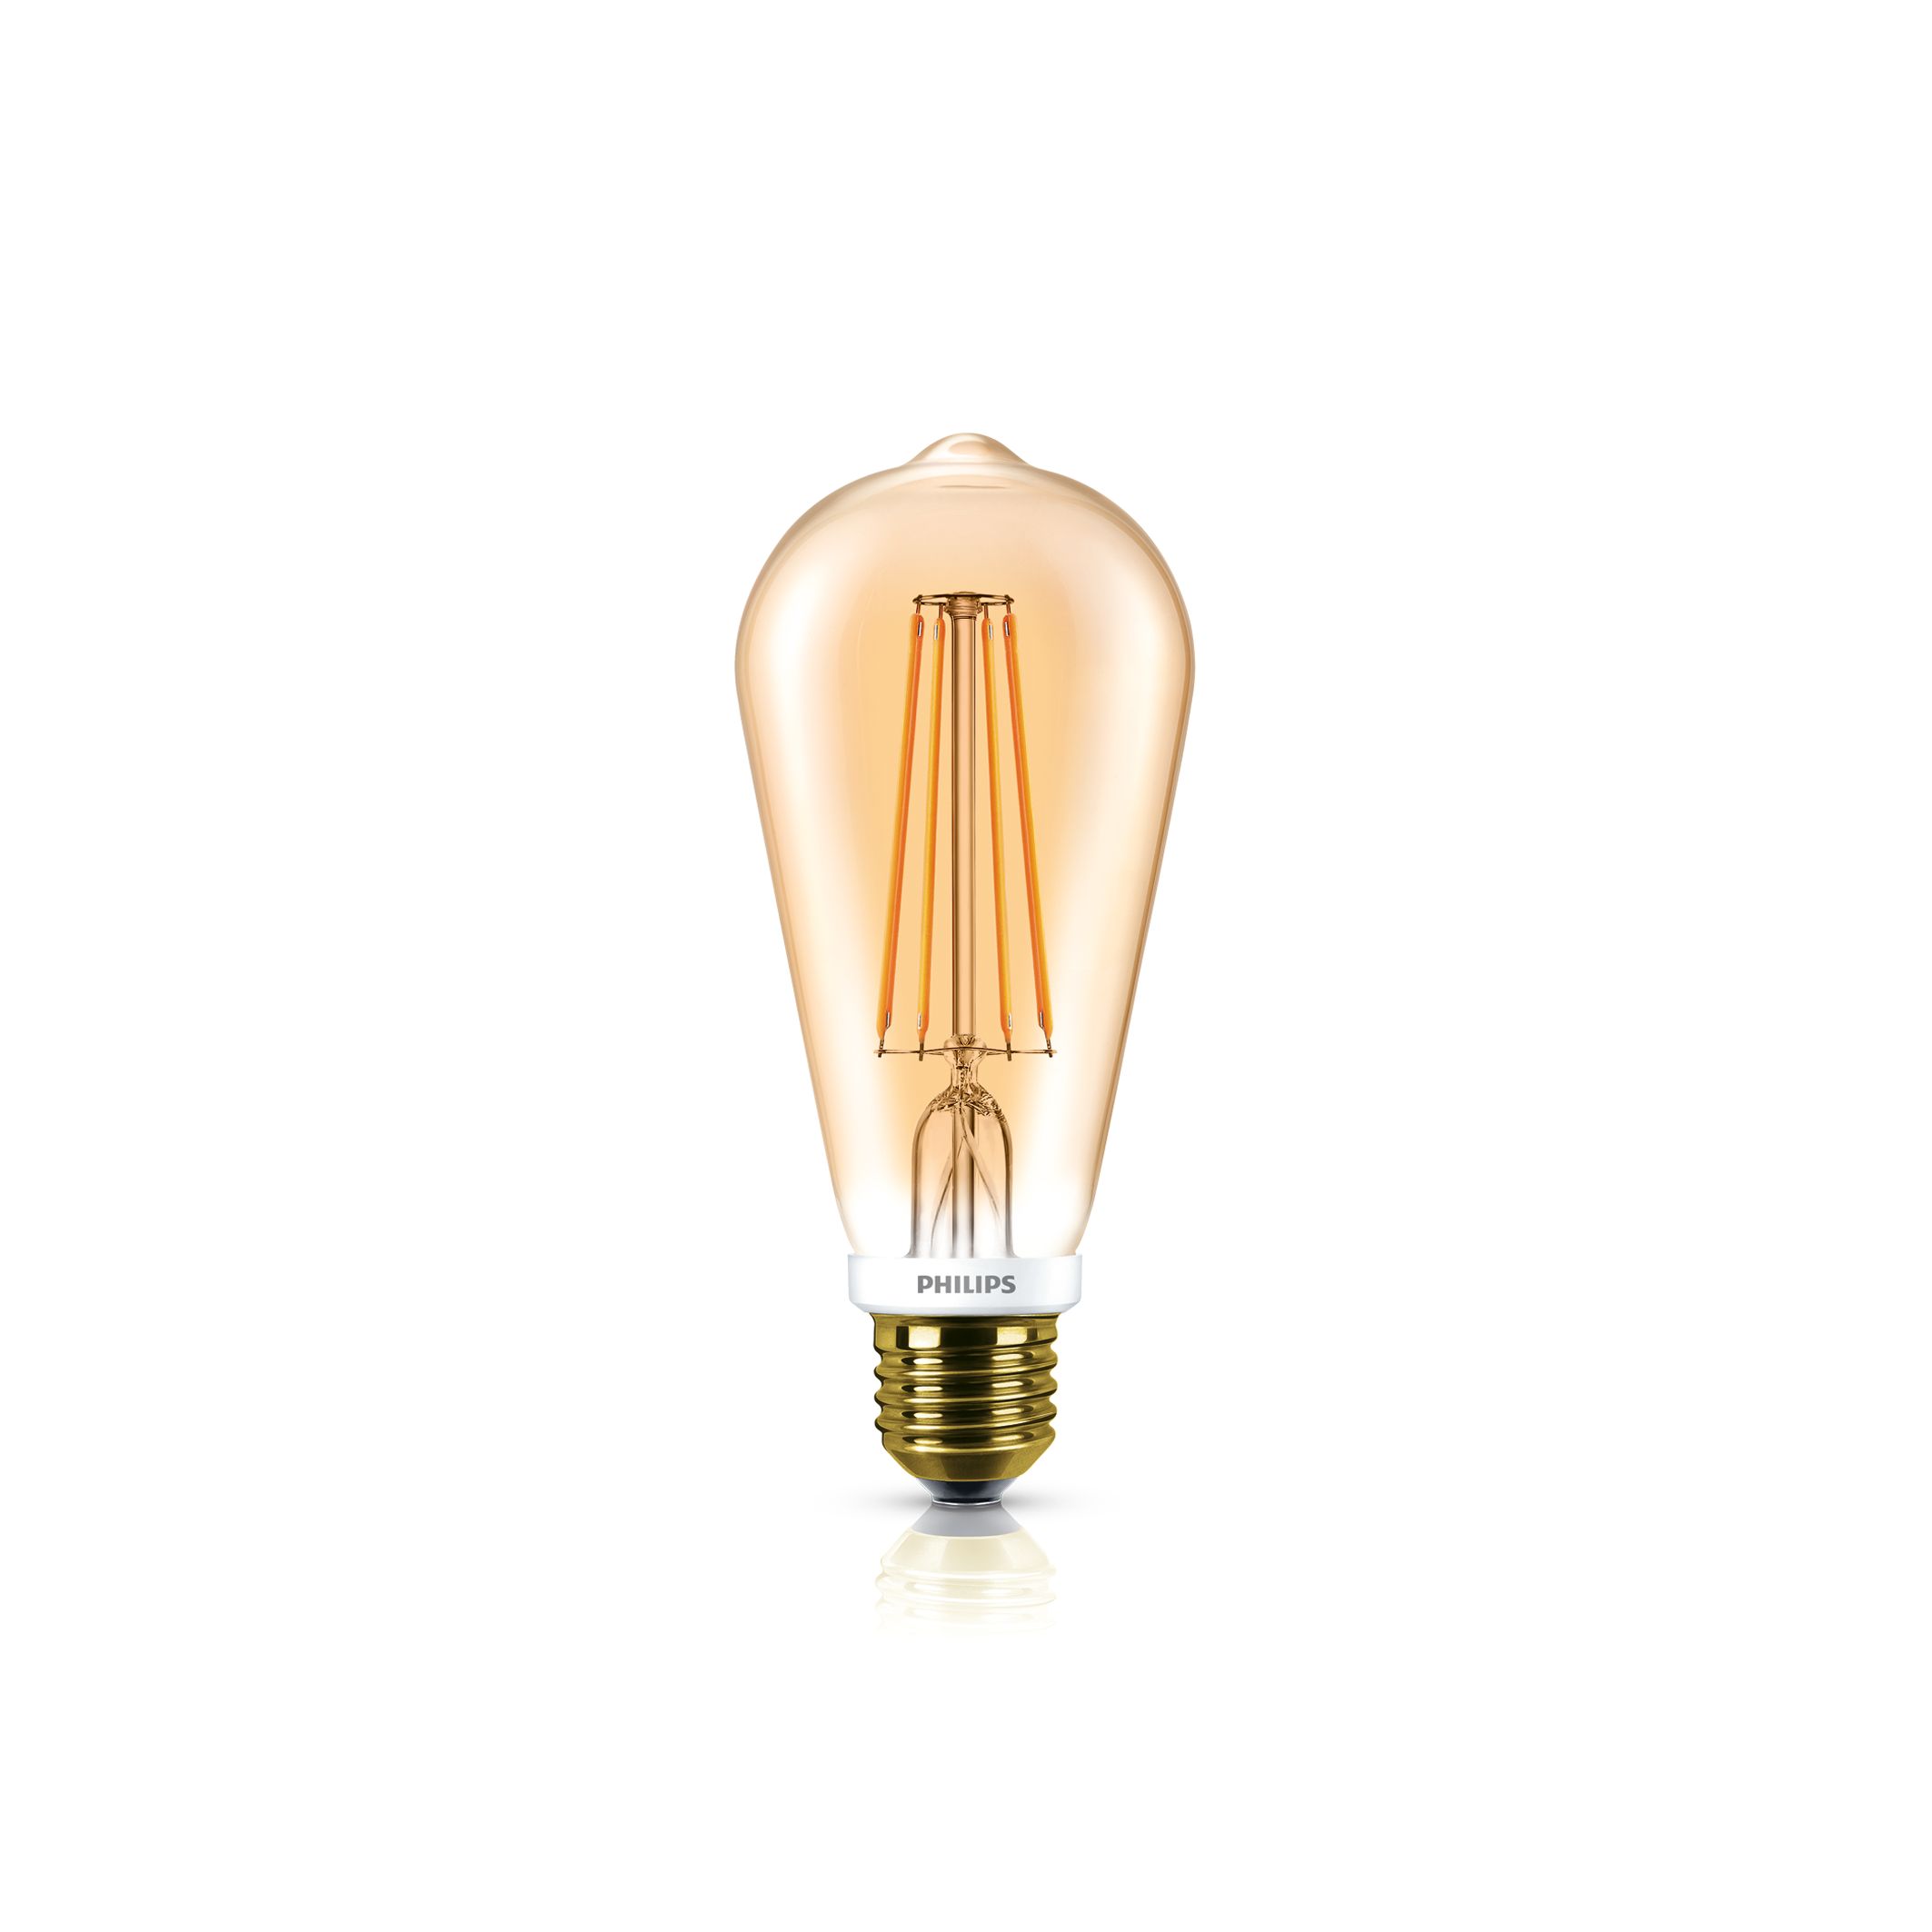 Dimmable E27 E14 LED Lights Bulbs Lamp Vintage Retro Filament Edison Antique RM